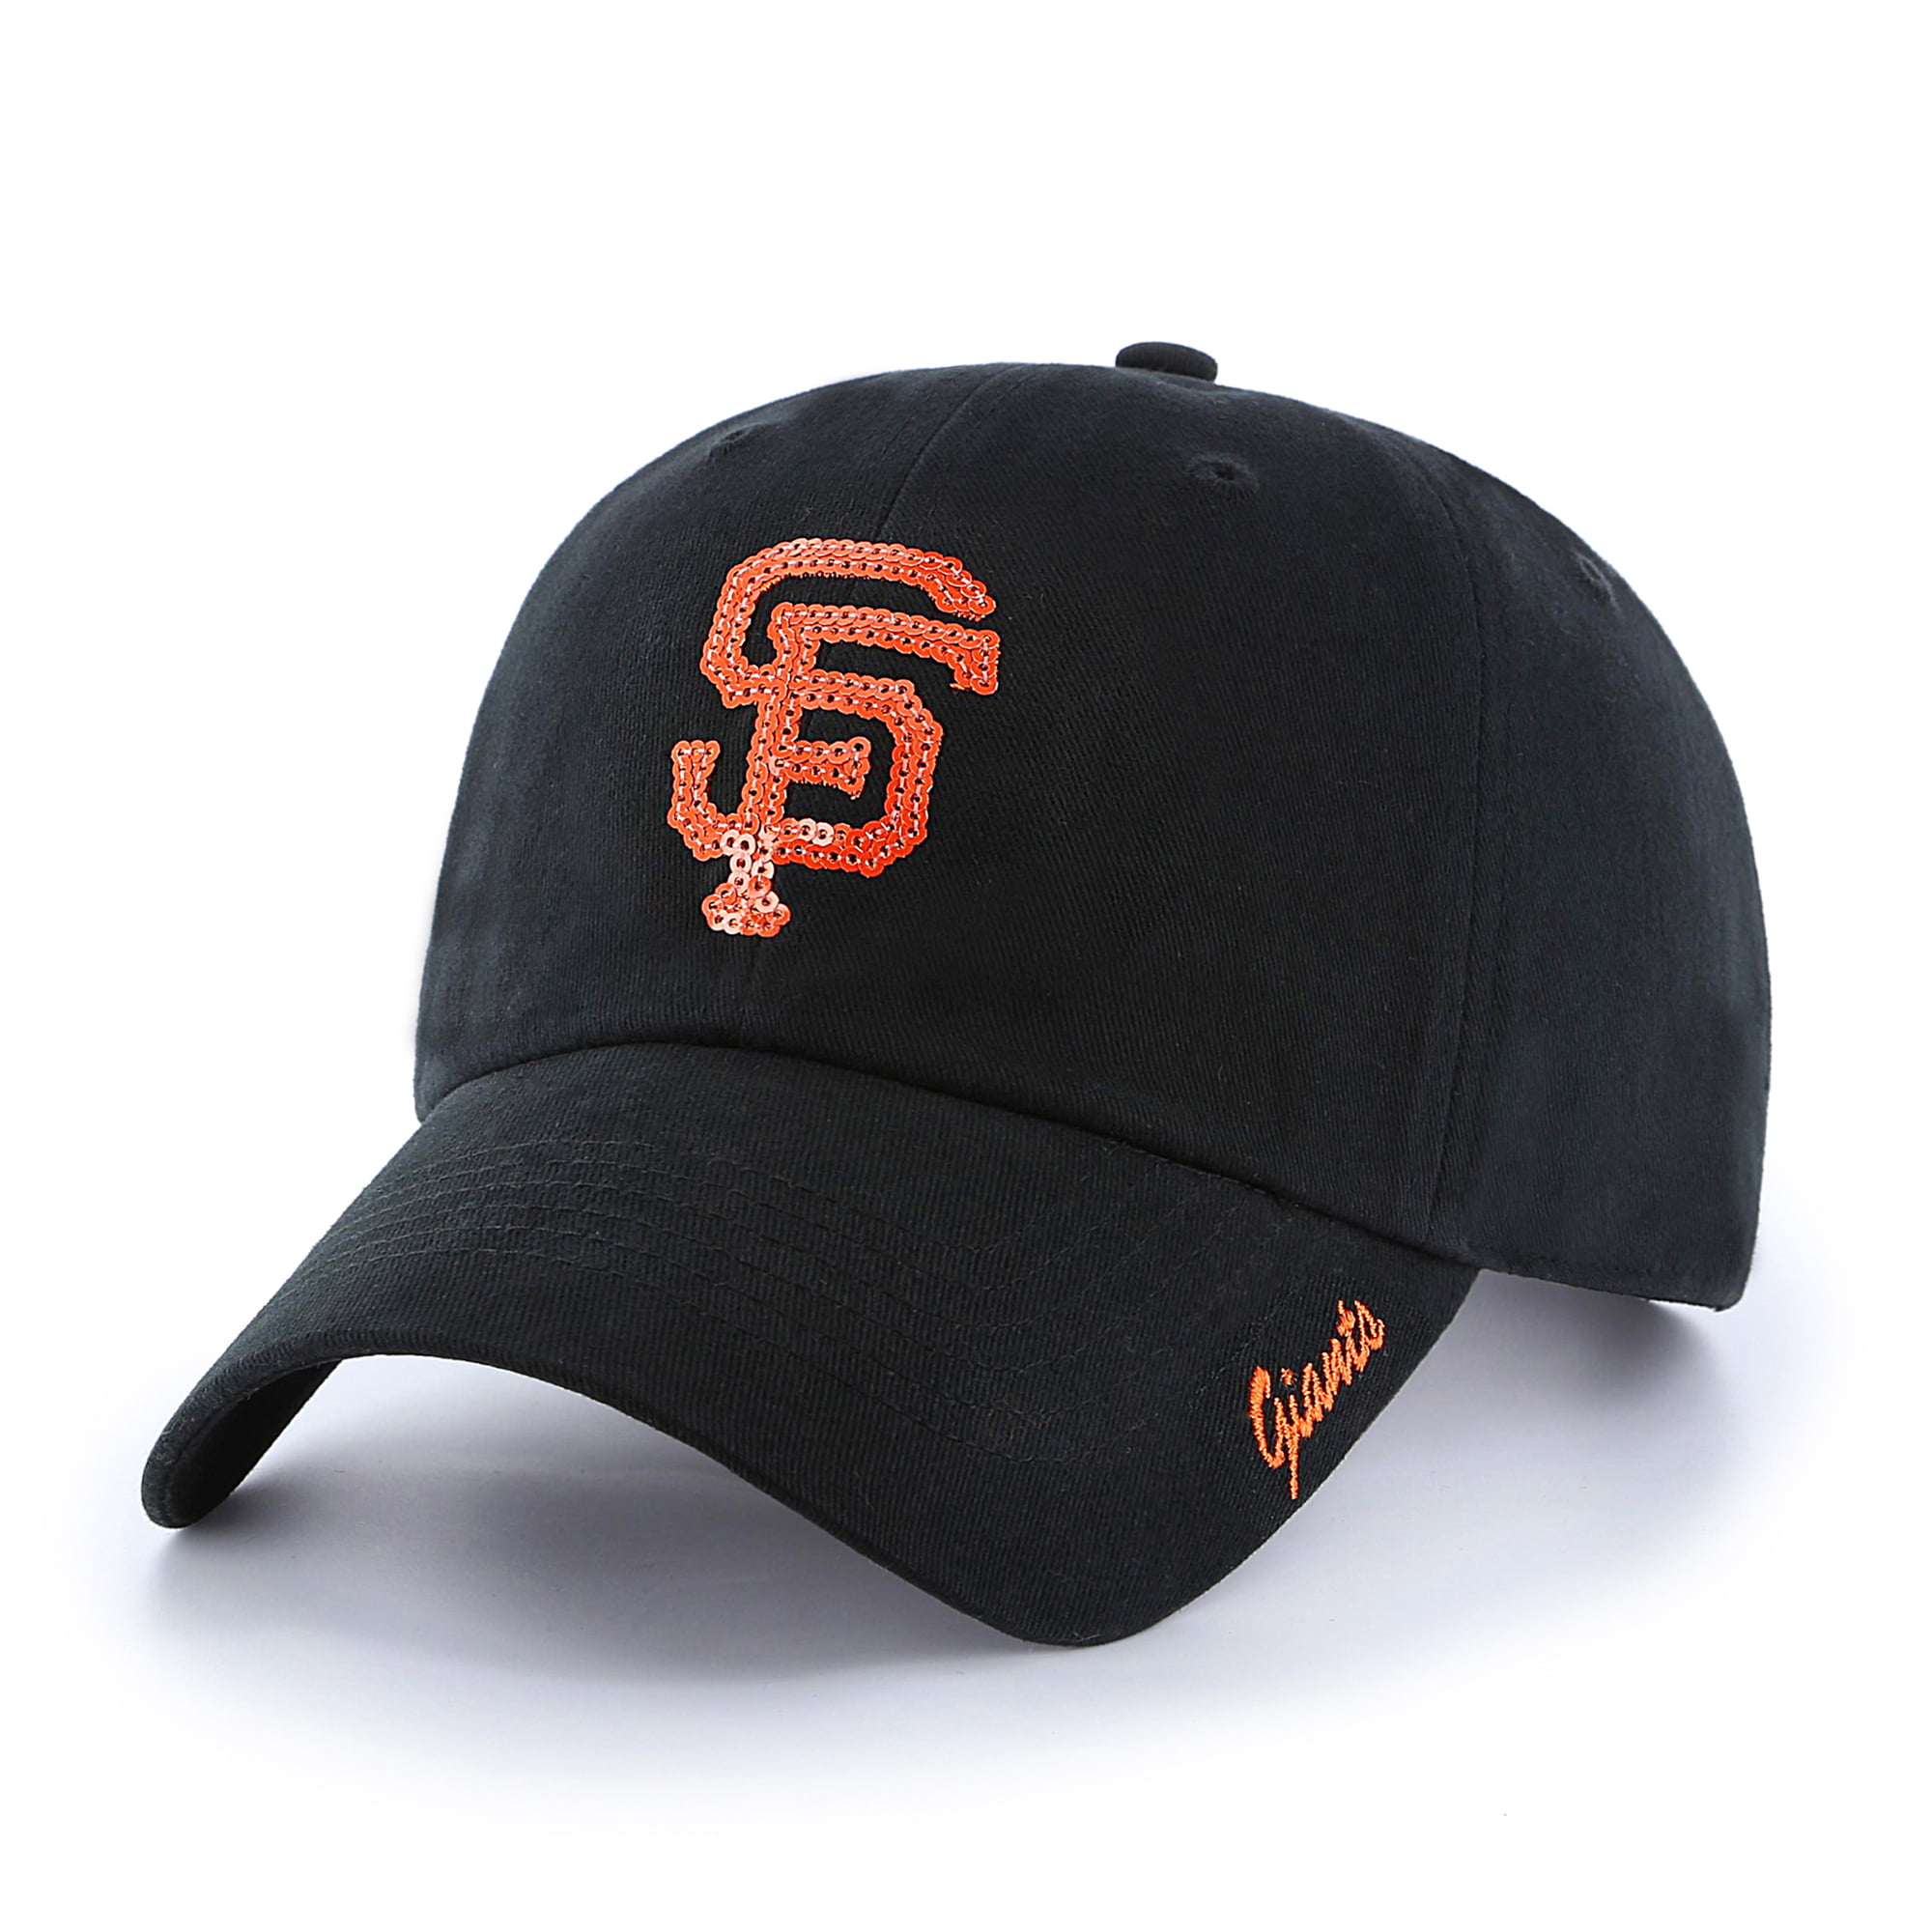 MLB San Francisco Giants Sparkle Women's Adjustable Cap/Hat by Fan Favorite